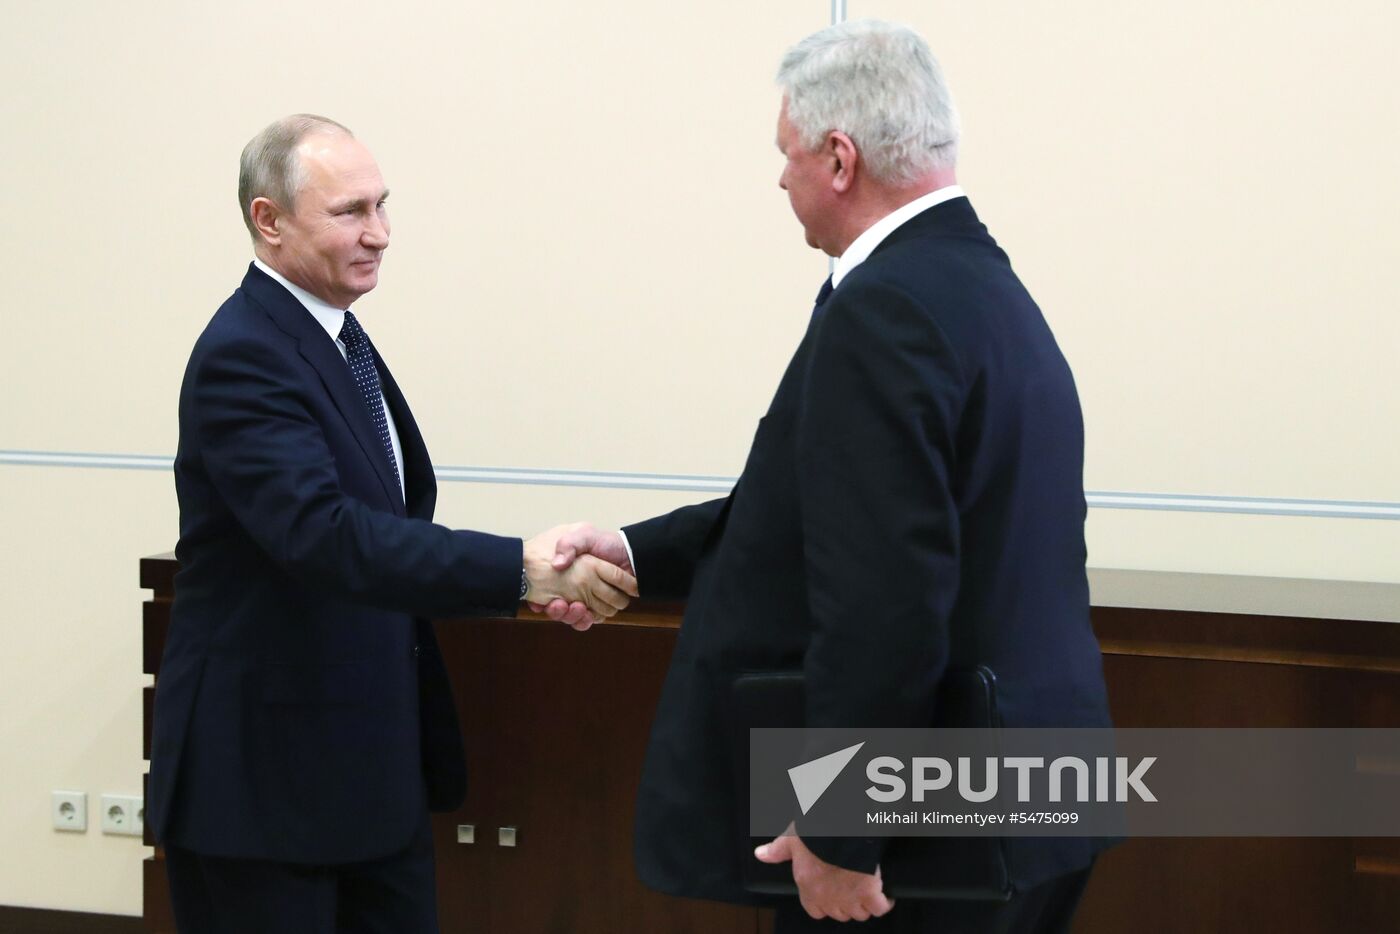 President Putin meets with FNRP head Shmakov